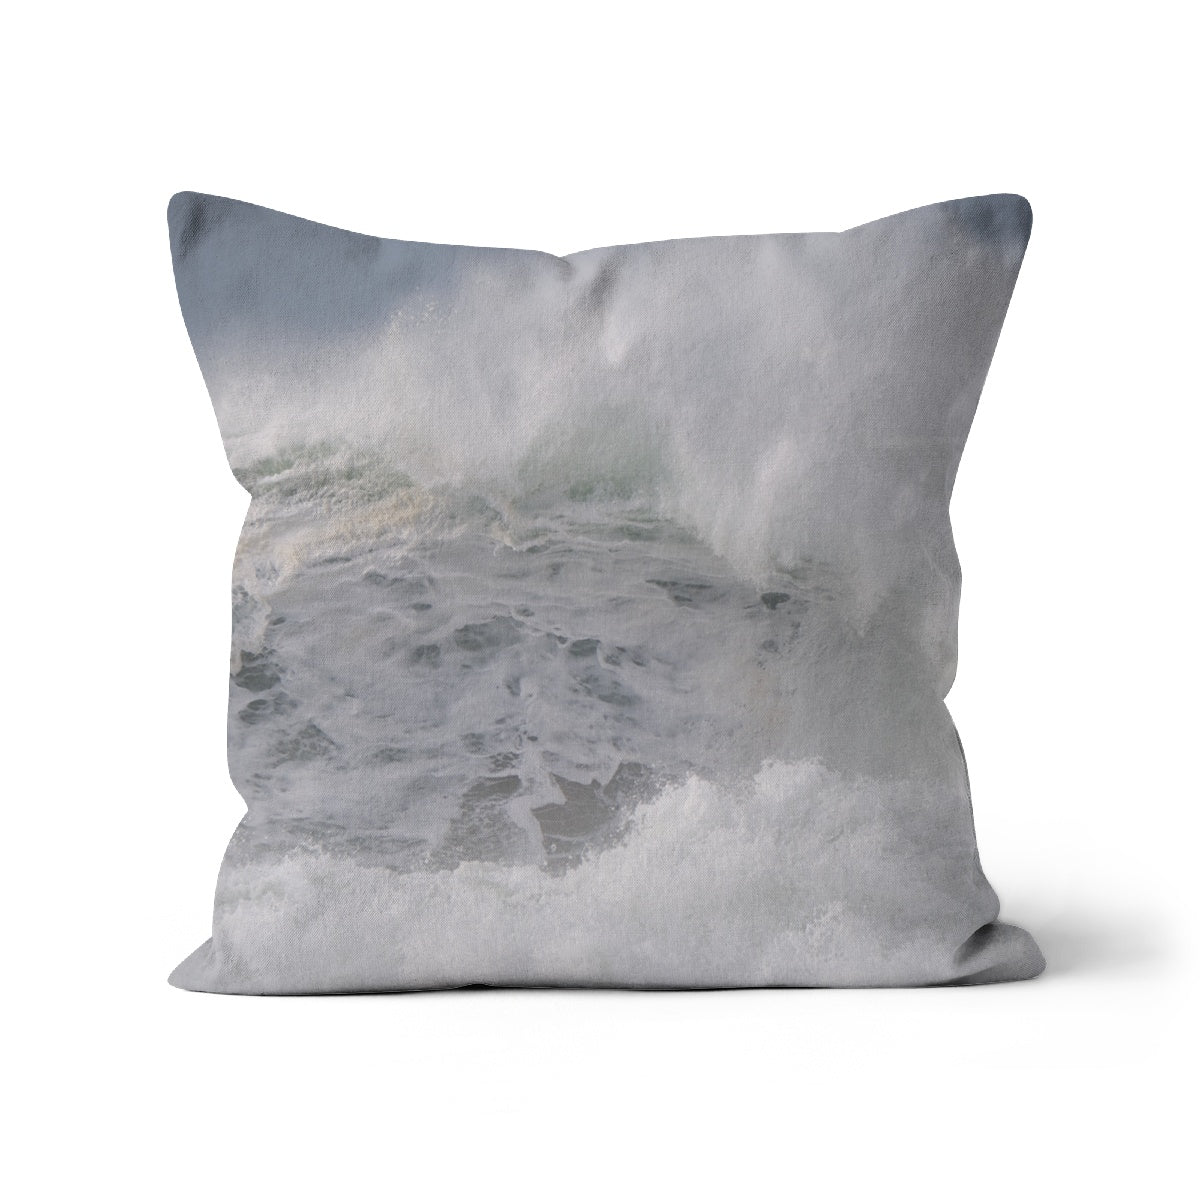 Dalbeg wild Atlantic wave Cushion